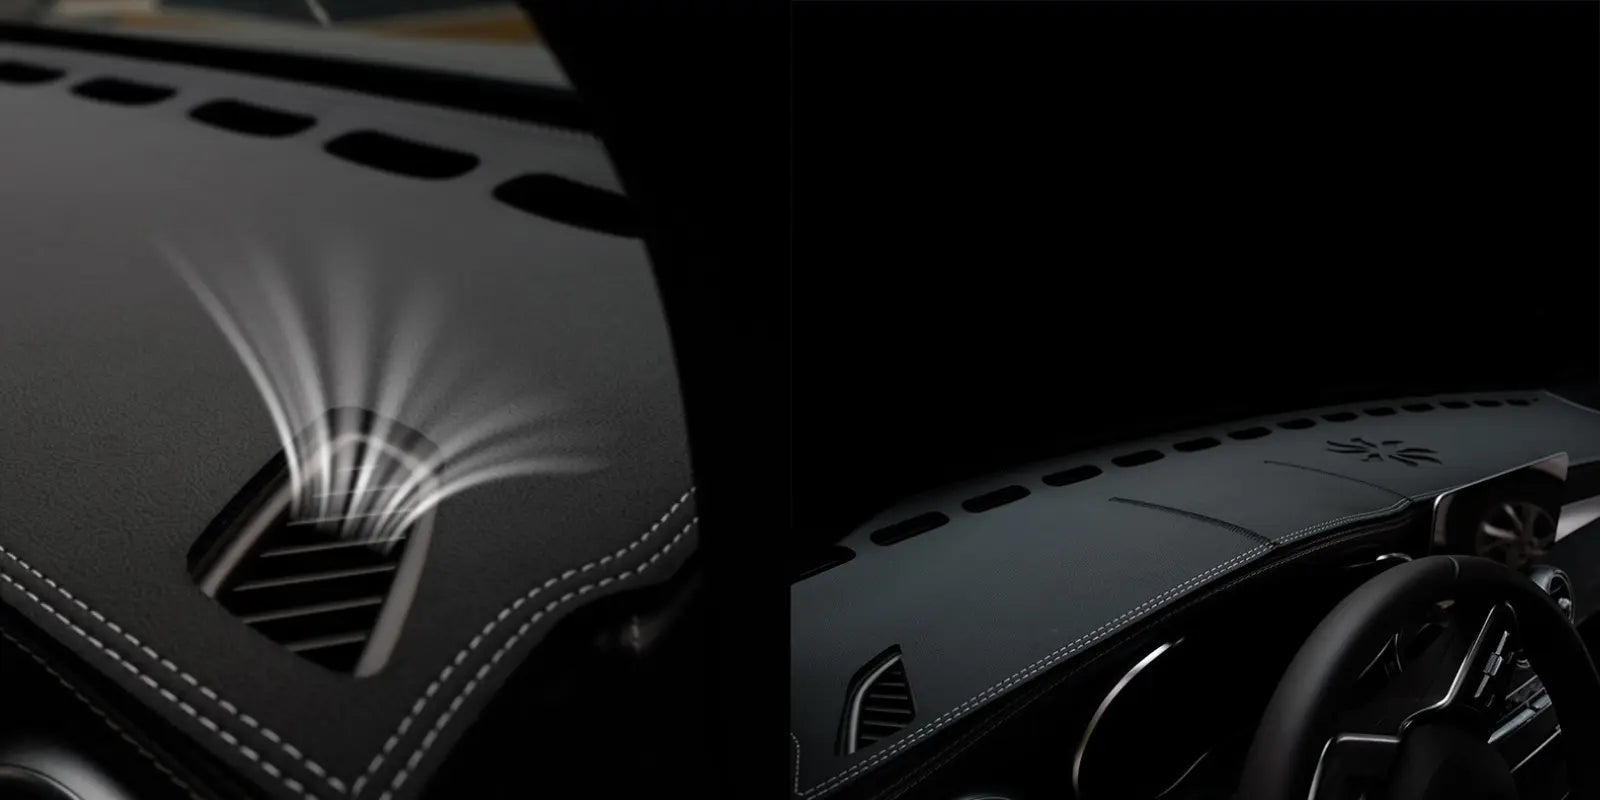 Black Car Dashboard Cover Mat Dash Pad Interior compatible for